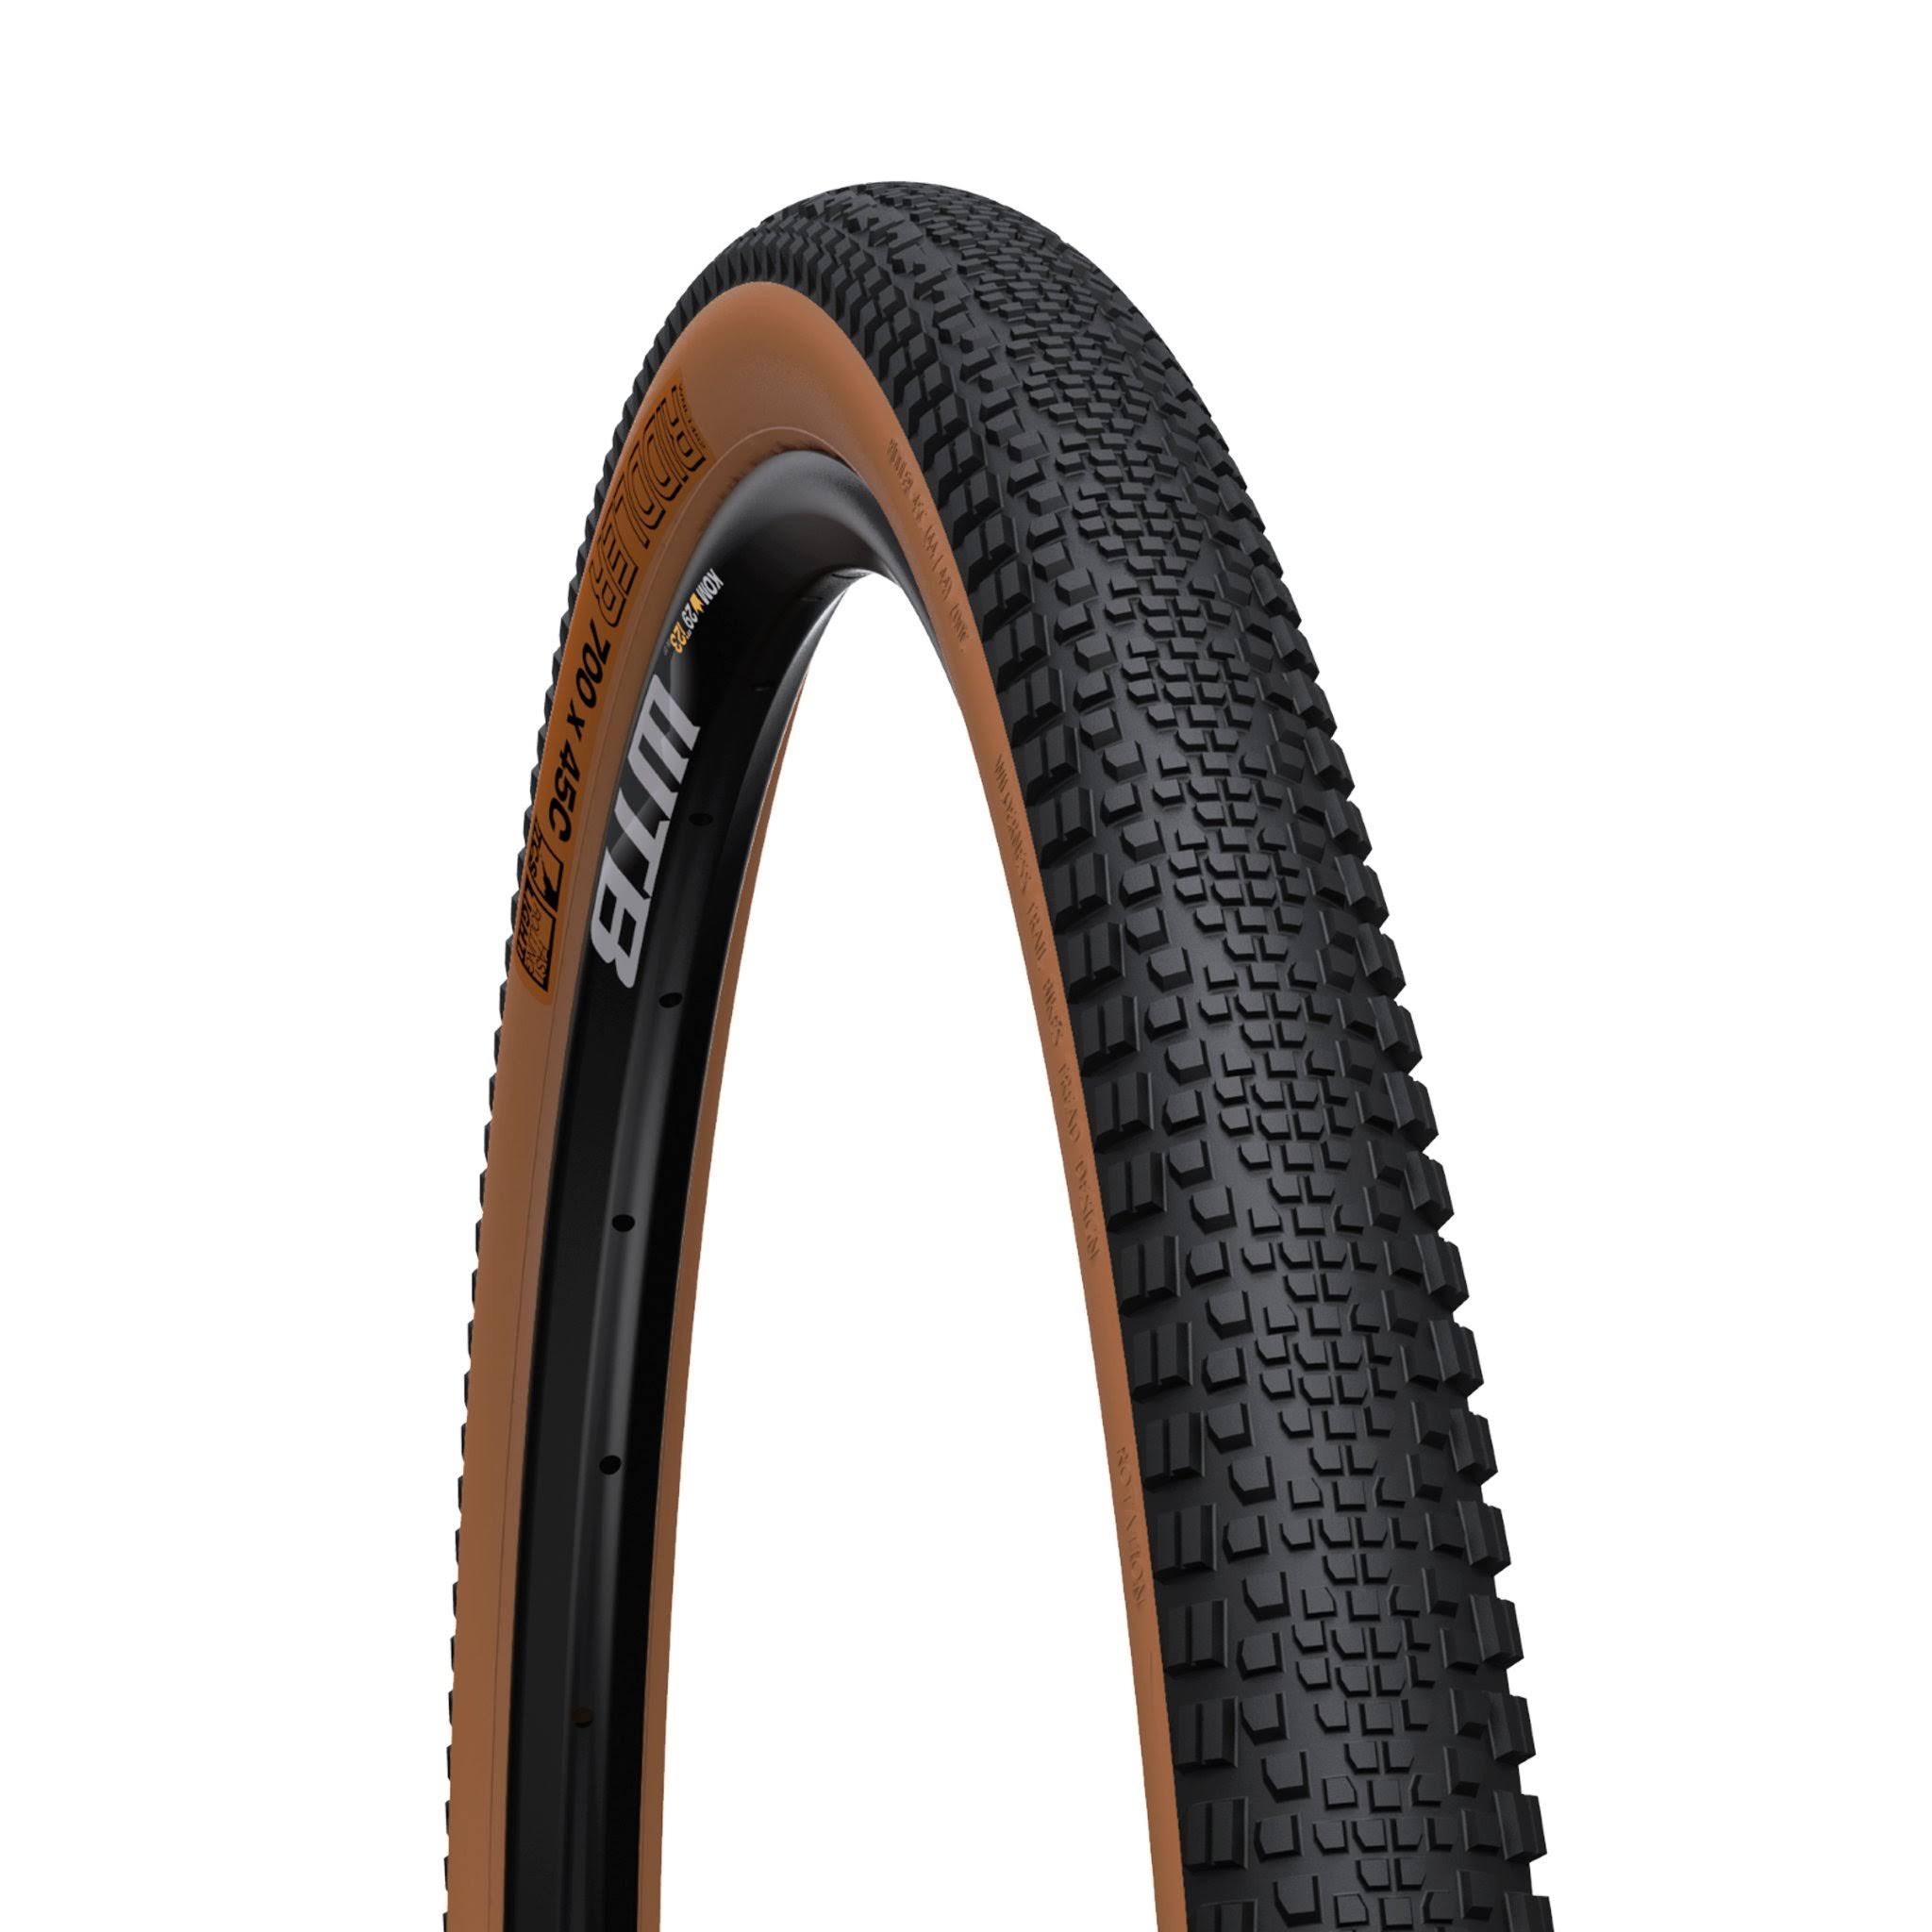 WTB Riddler TCS Light Fast Rolling Bicycle Tire - Black, 700c x 45c